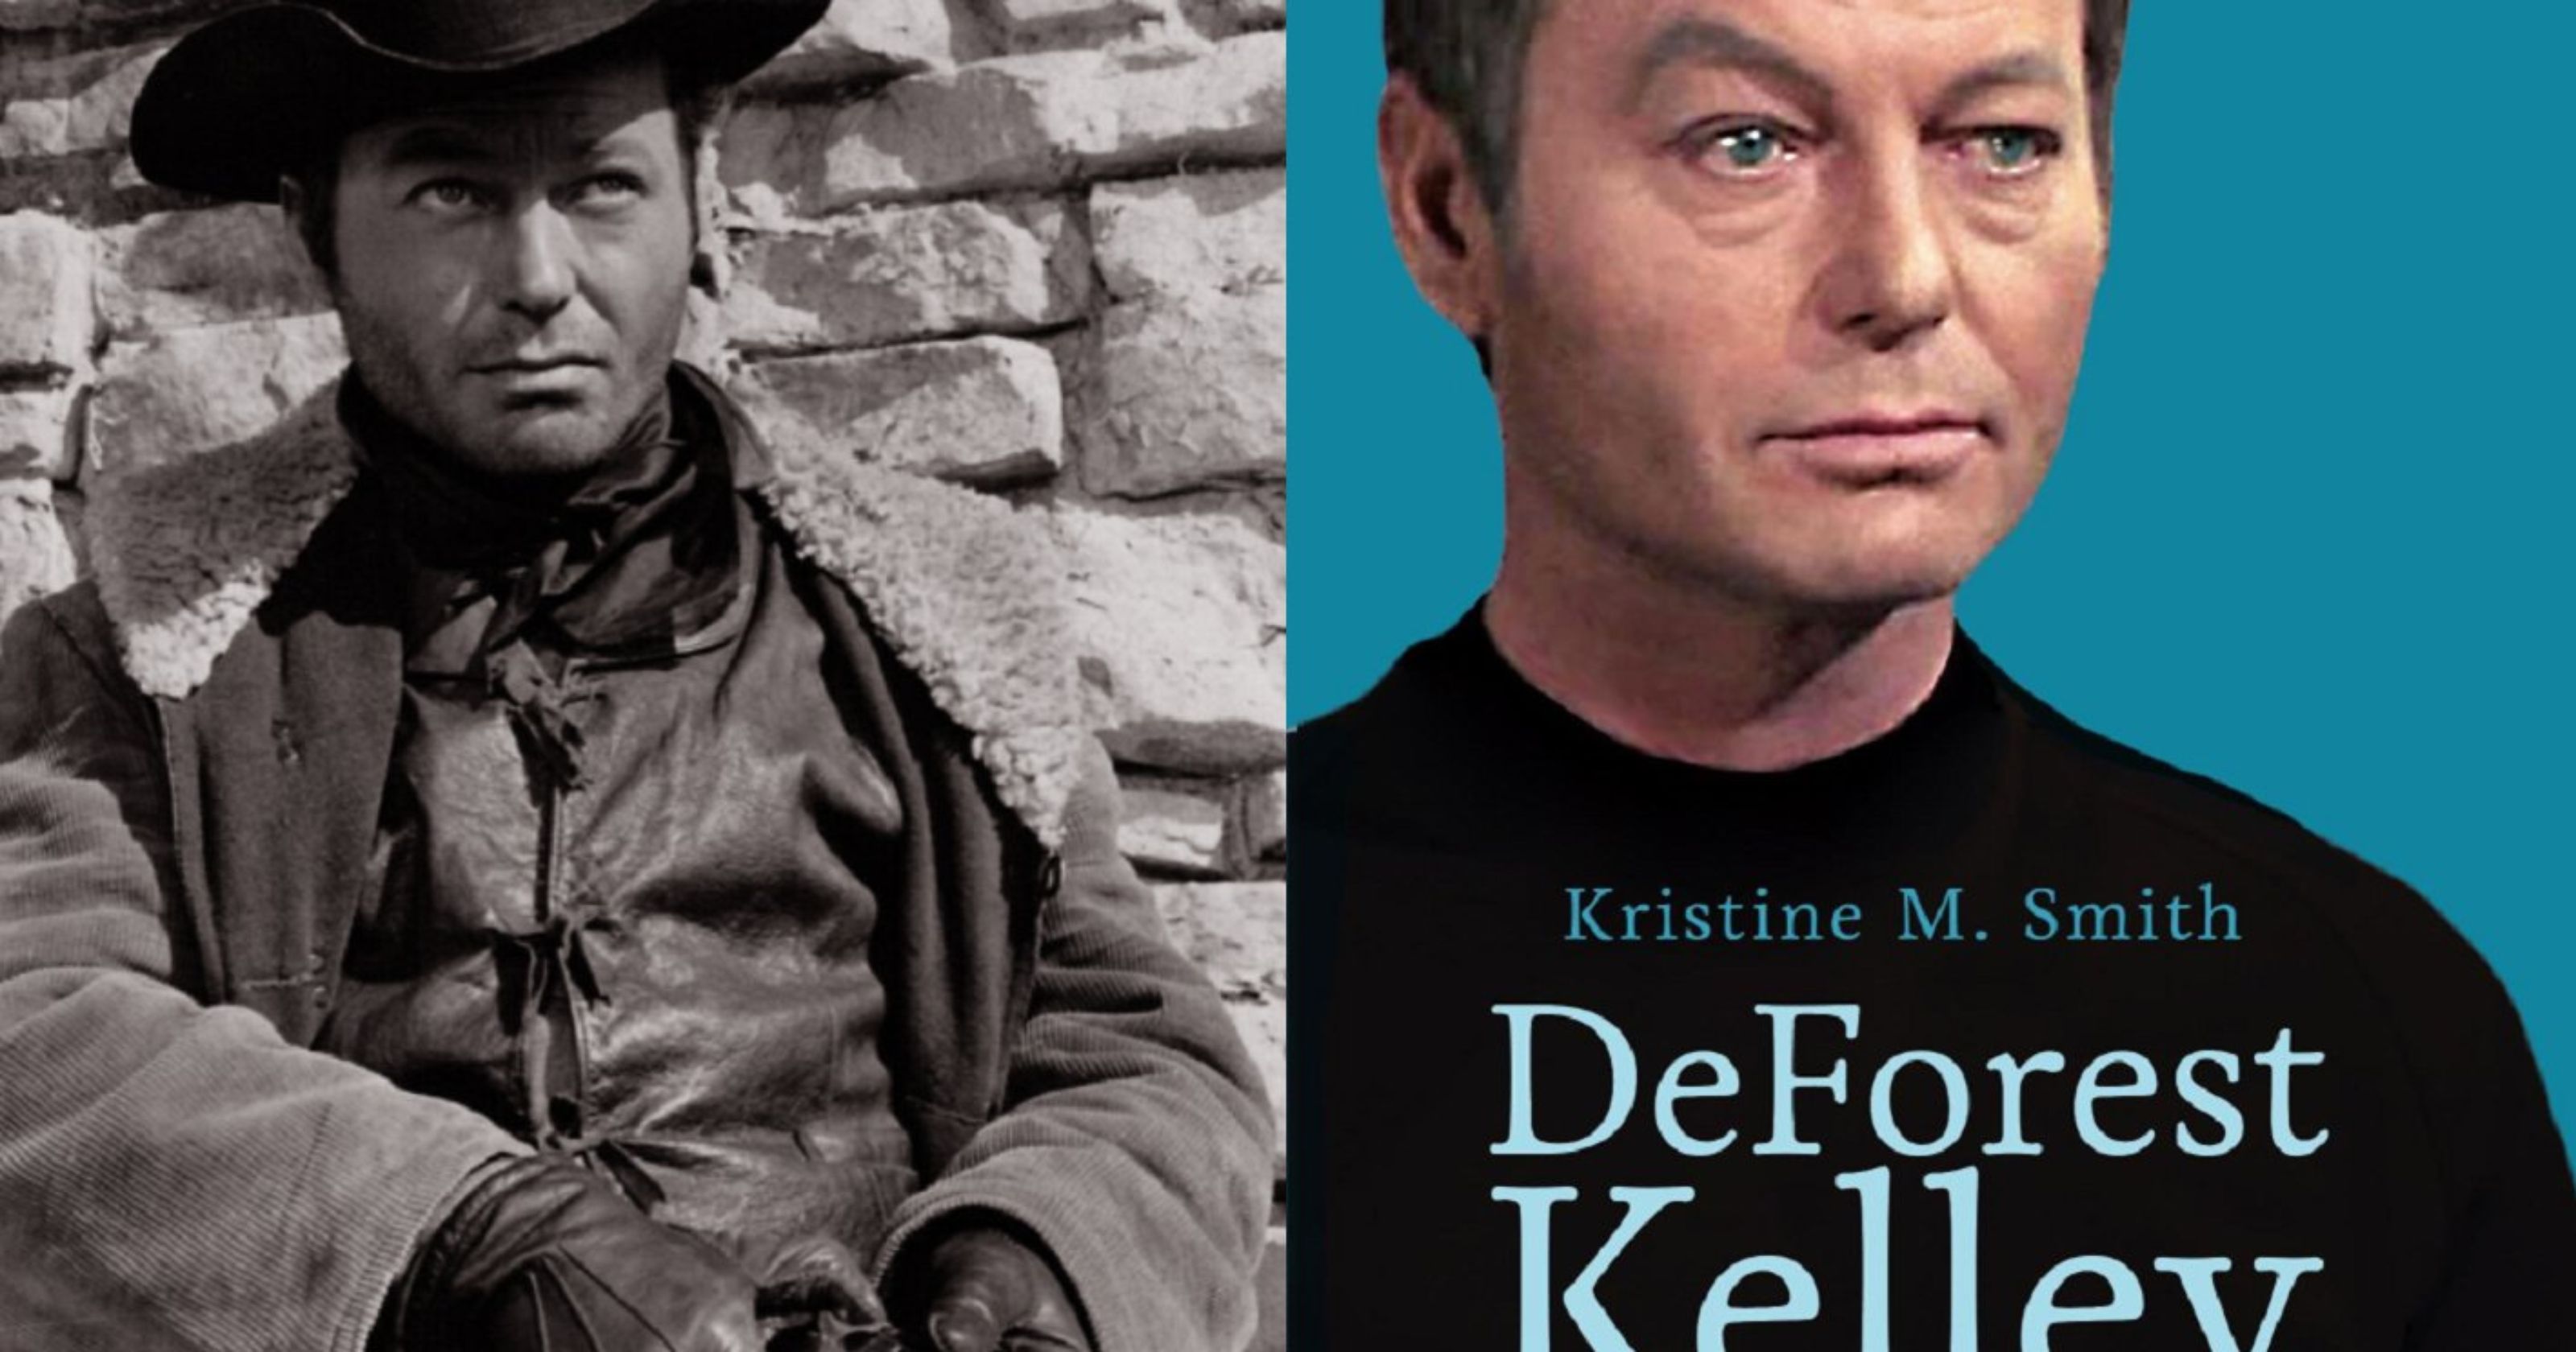 Star Trek's DeForest Kelley was the real McCoy